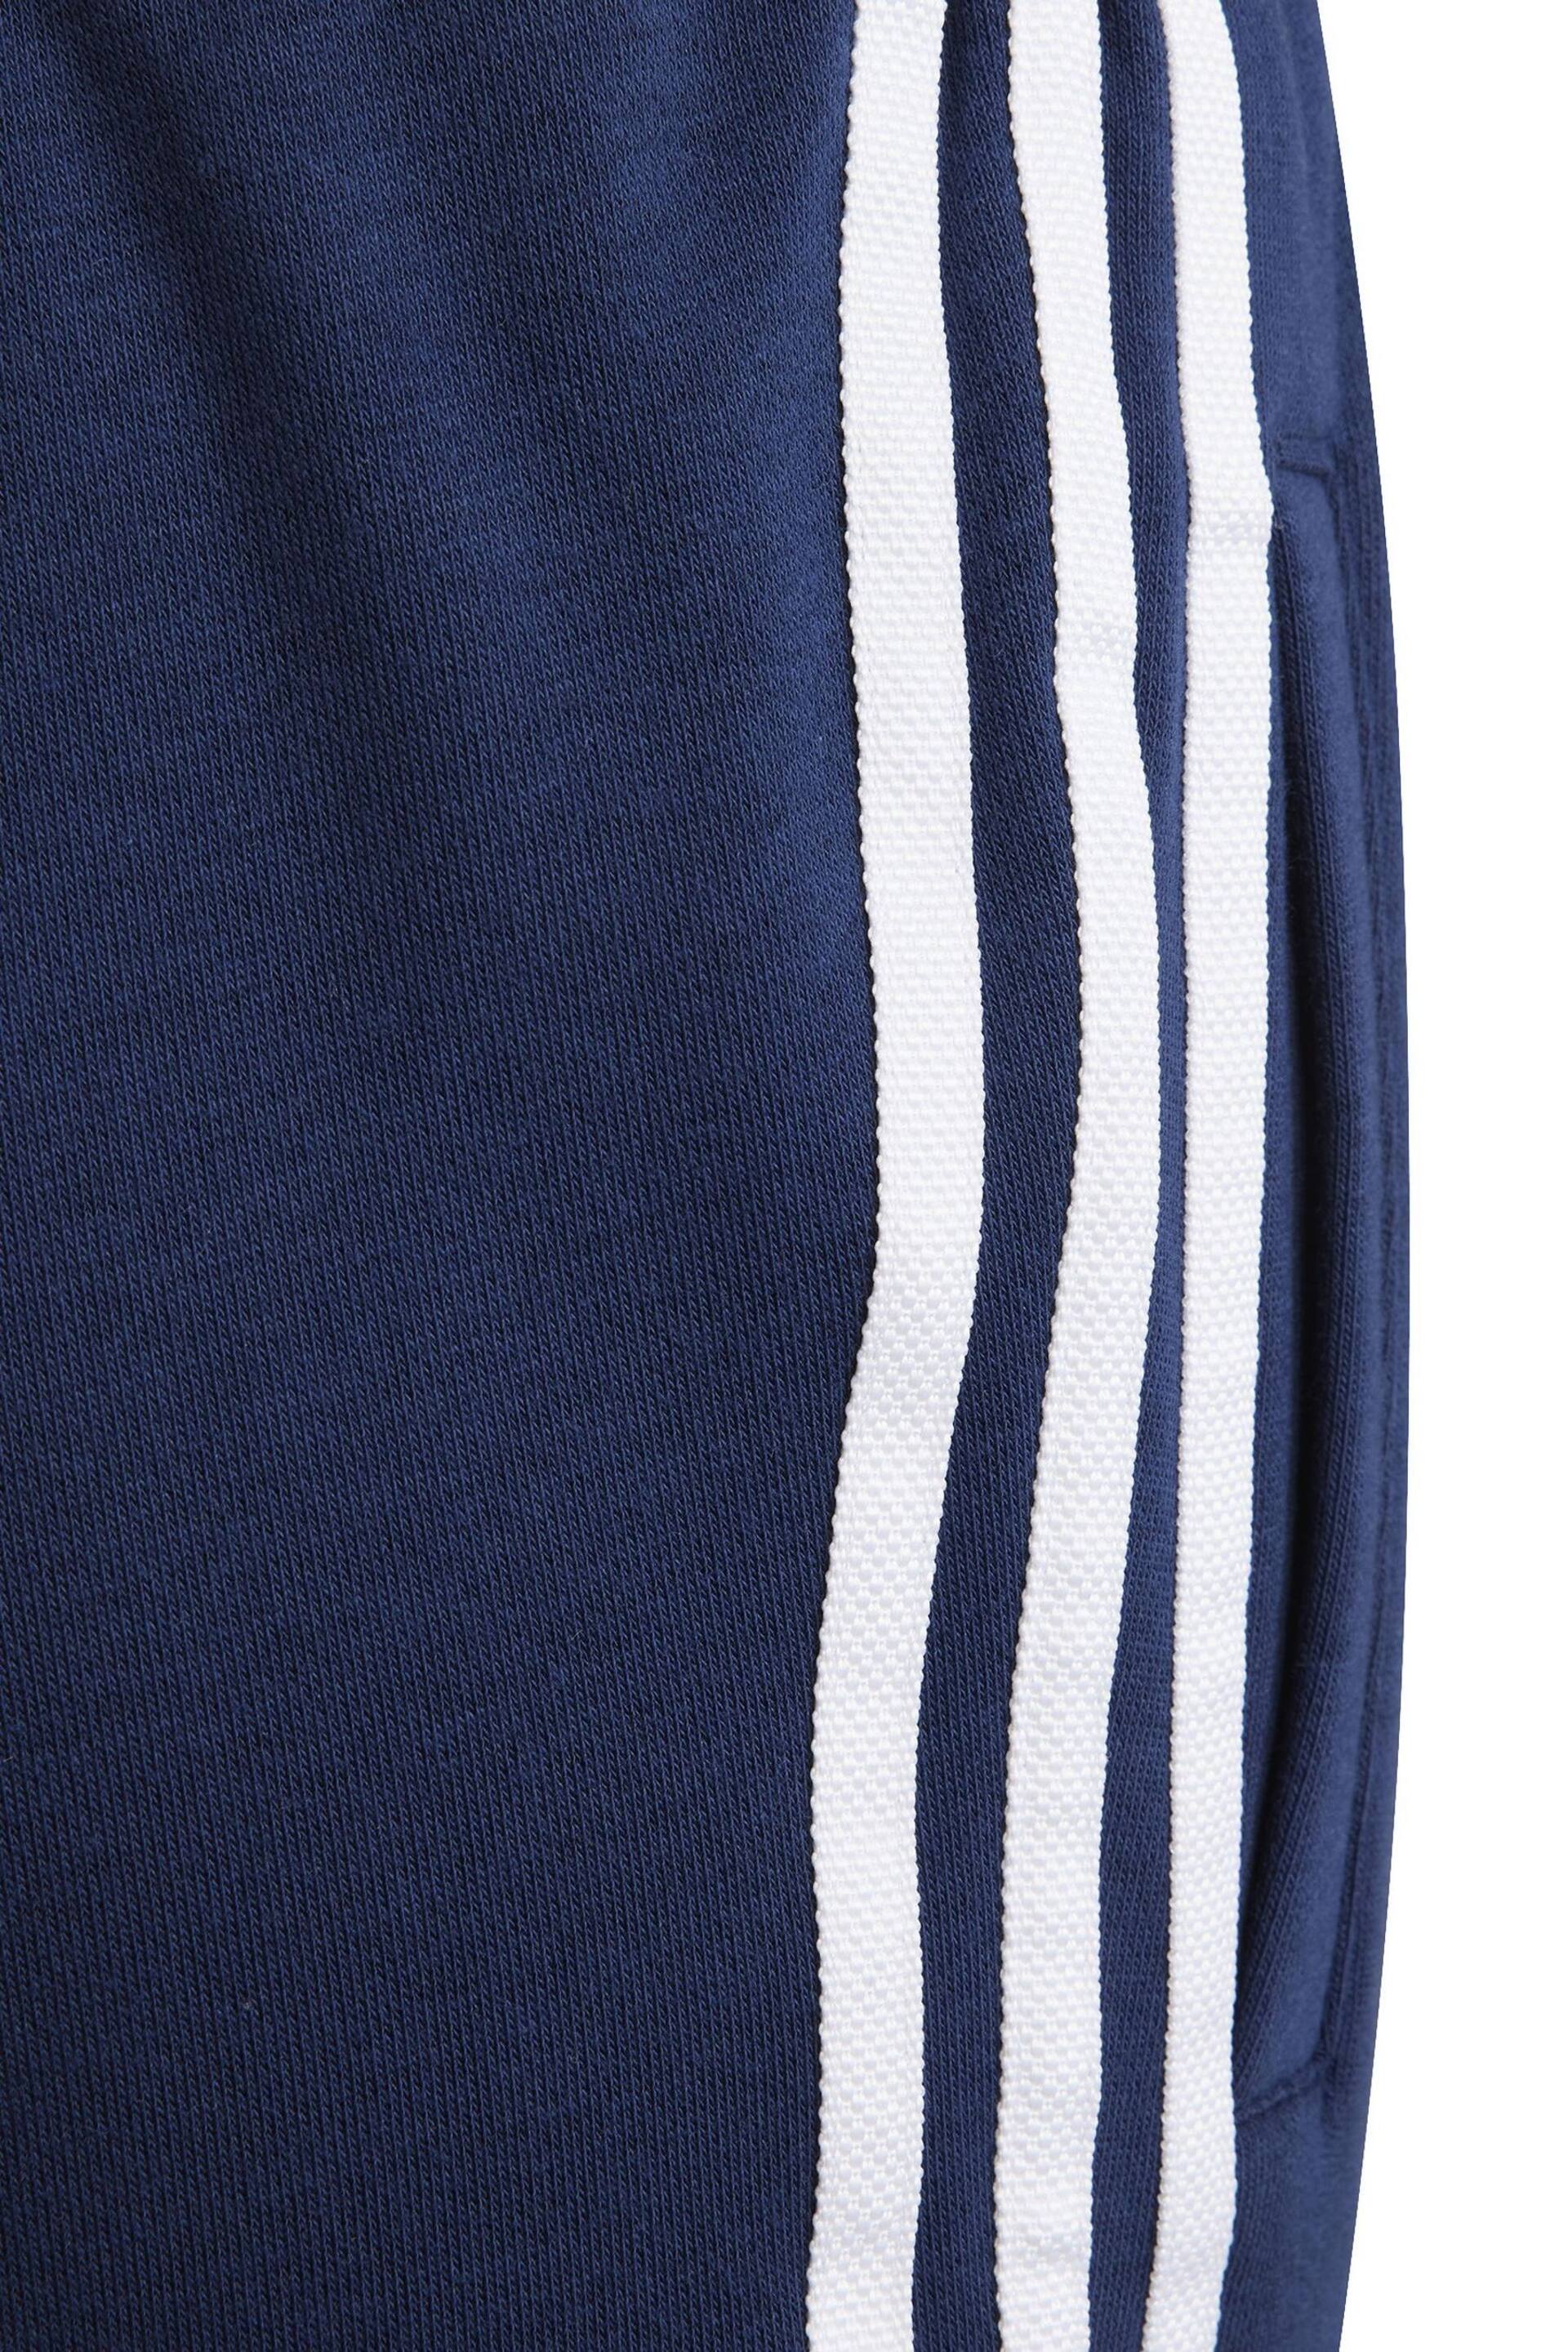 adidas Originals 3-Stripe Joggers - Image 9 of 10